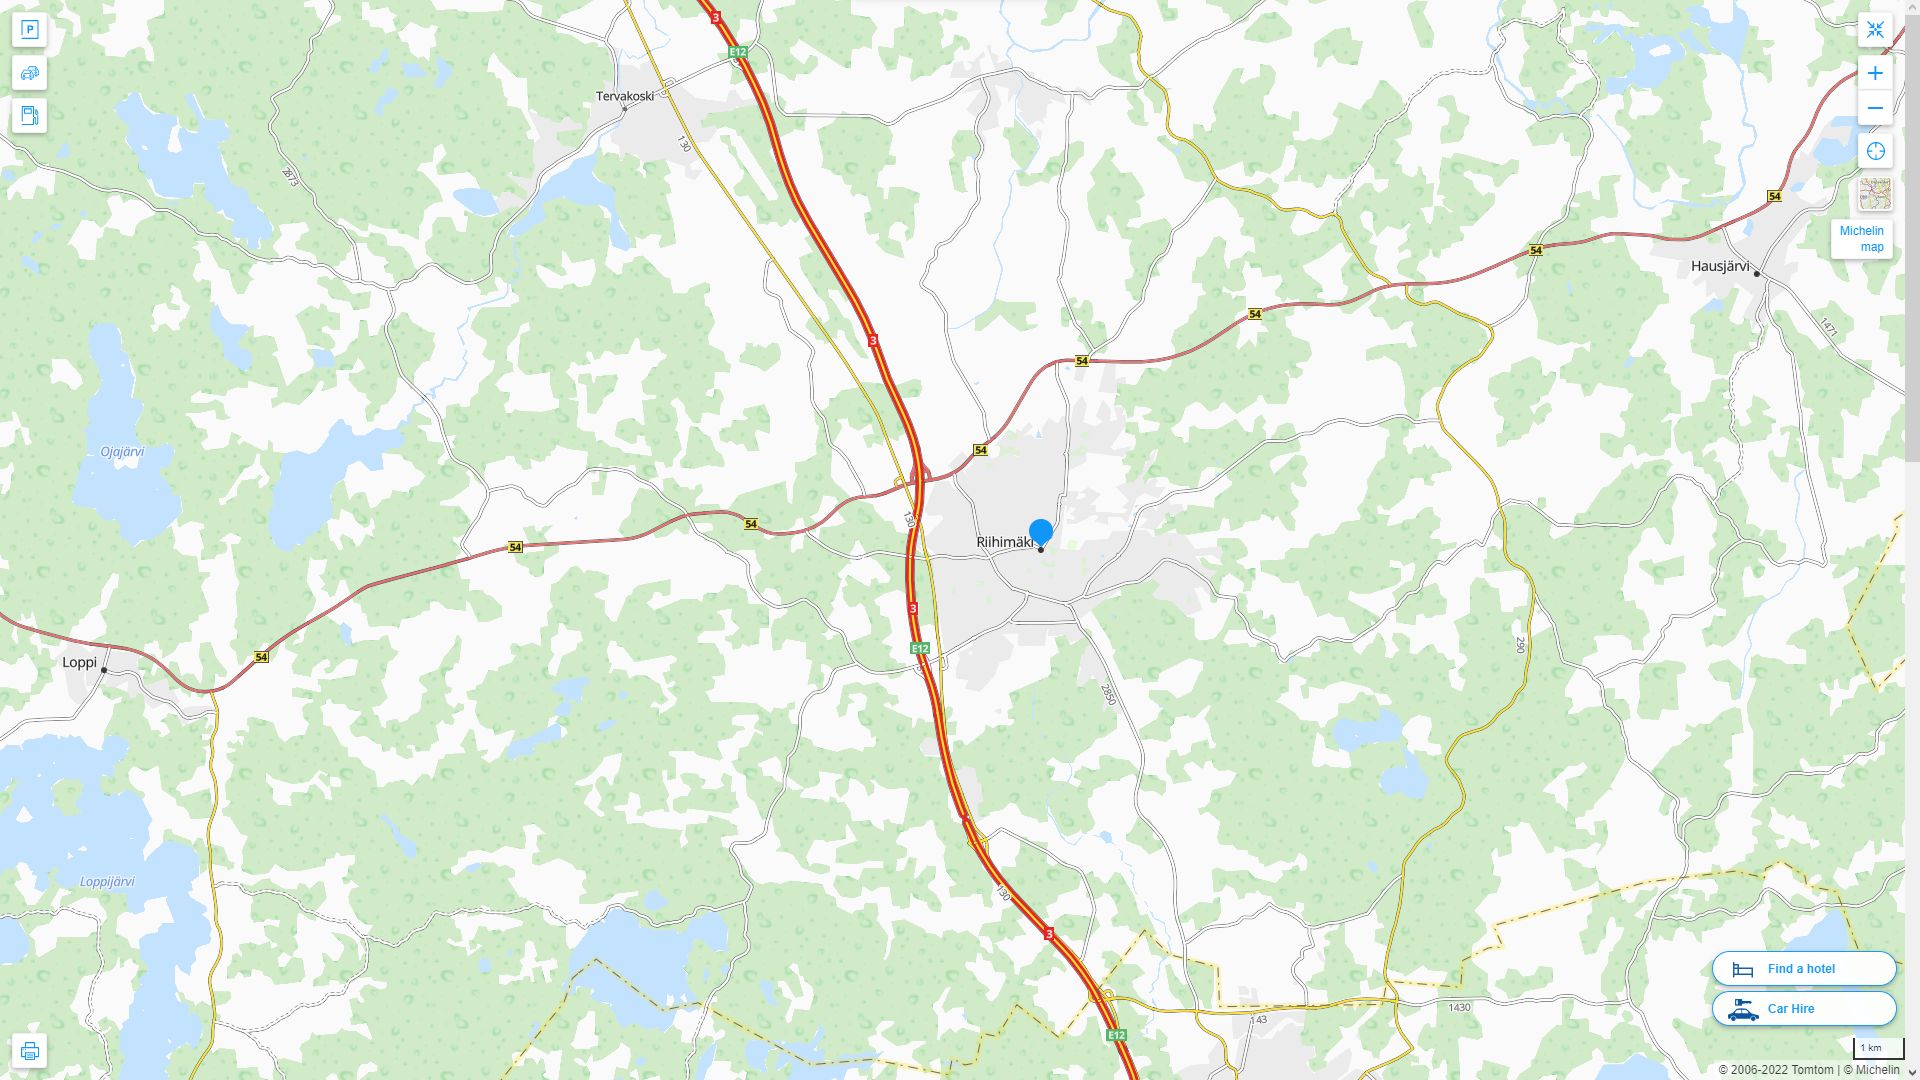 Riihimaki Finlande Autoroute et carte routiere